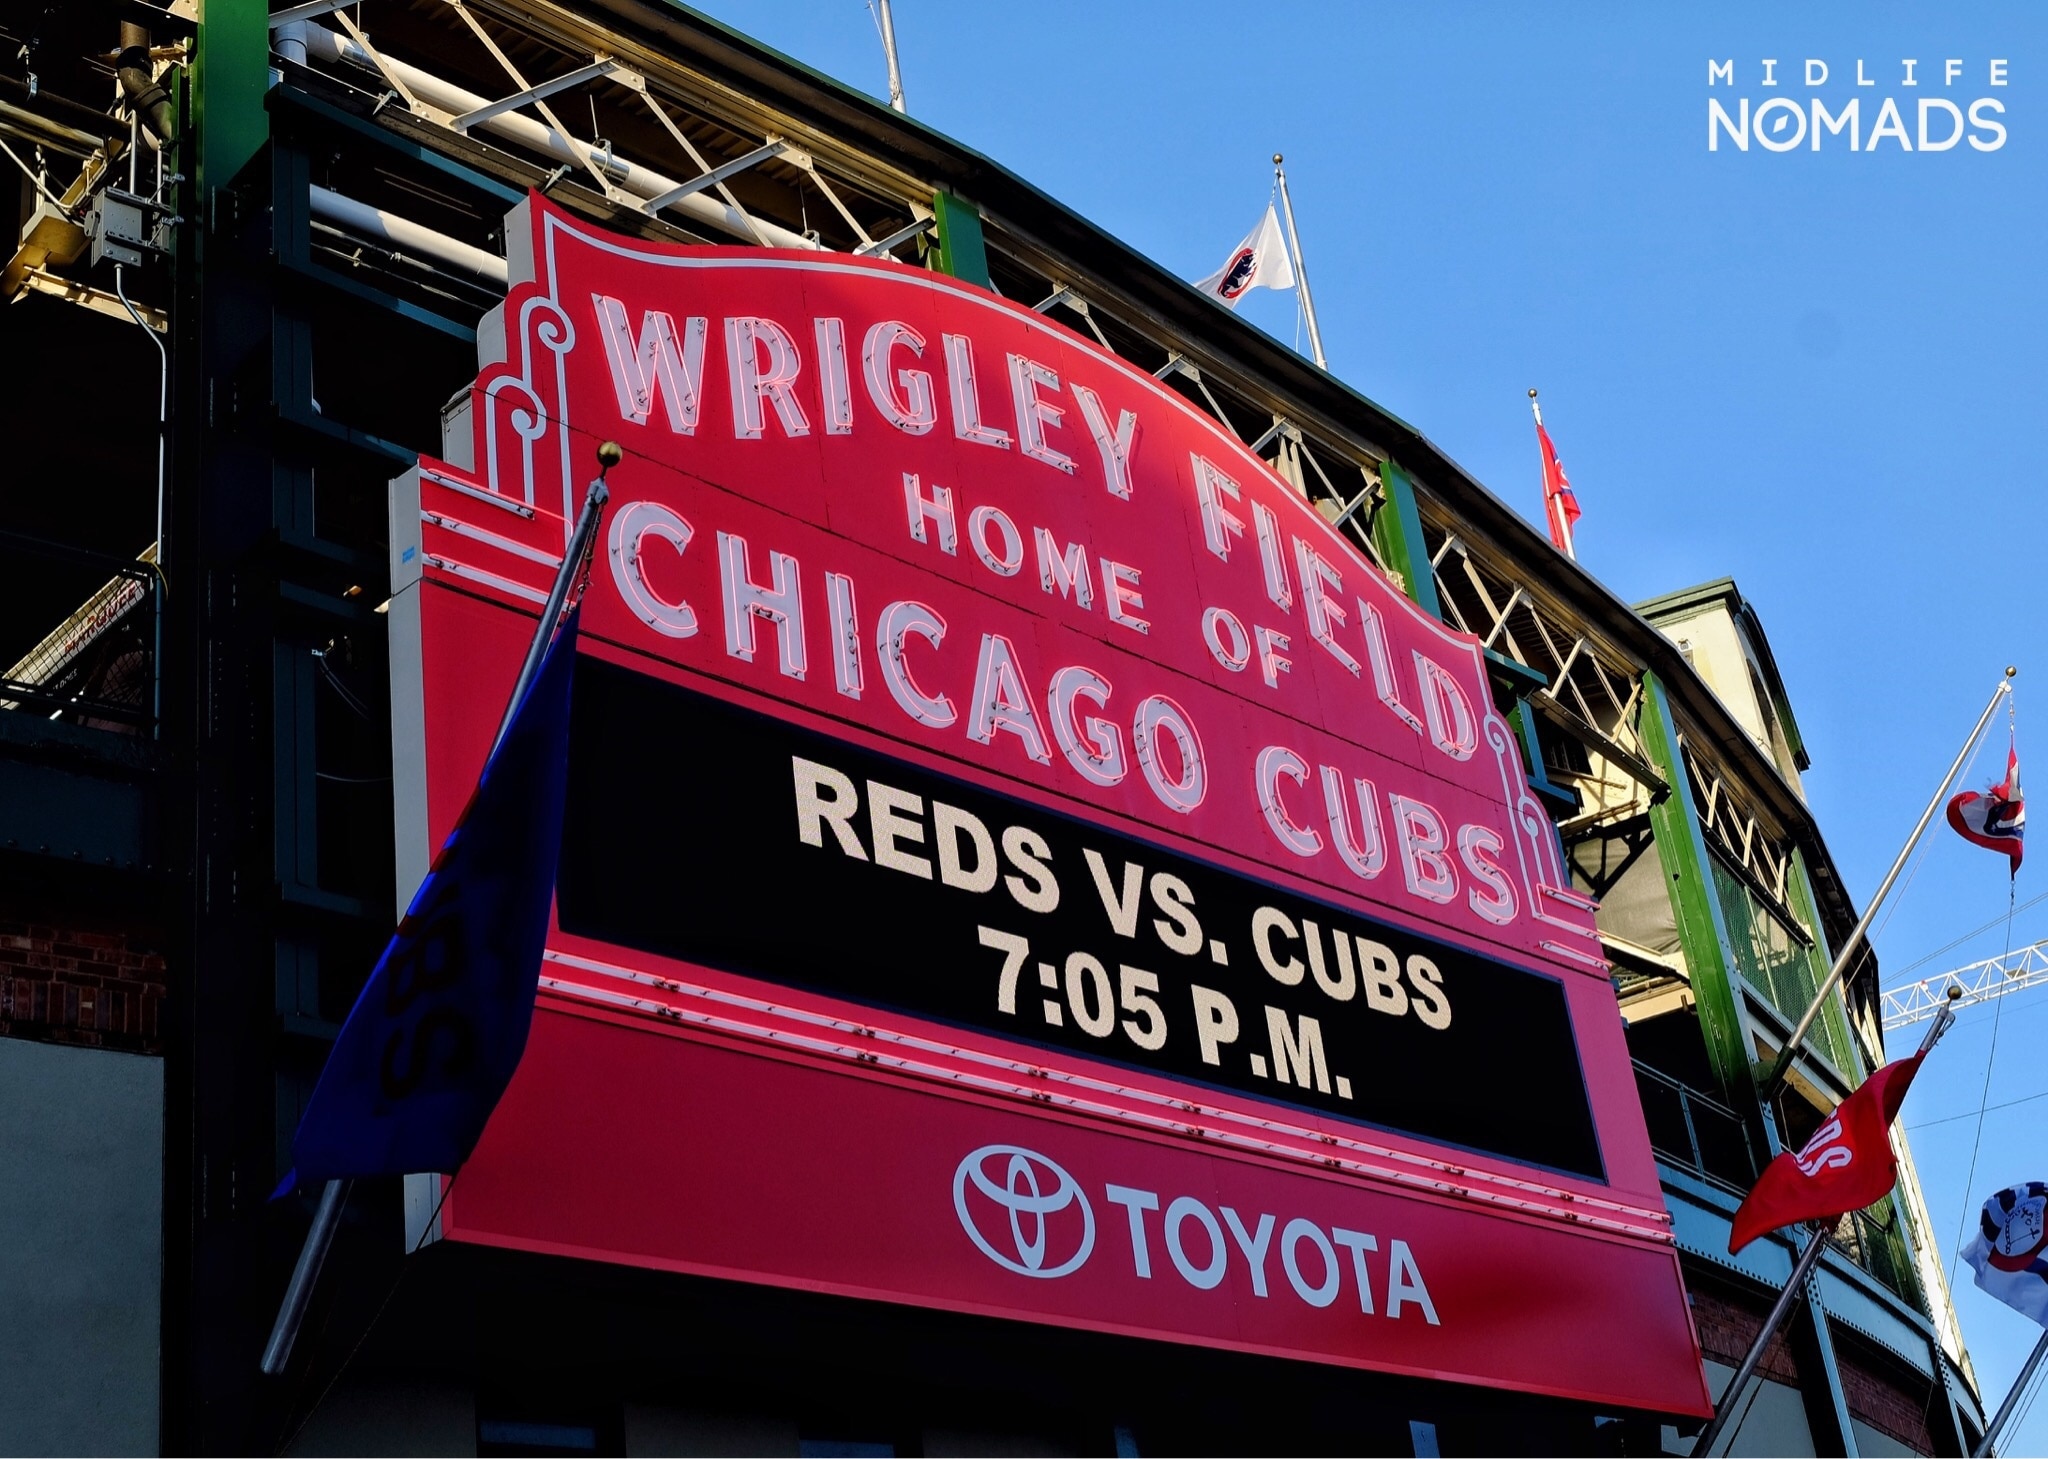 PHOTOS: Cubs Raise Championship Banner At Wrigley